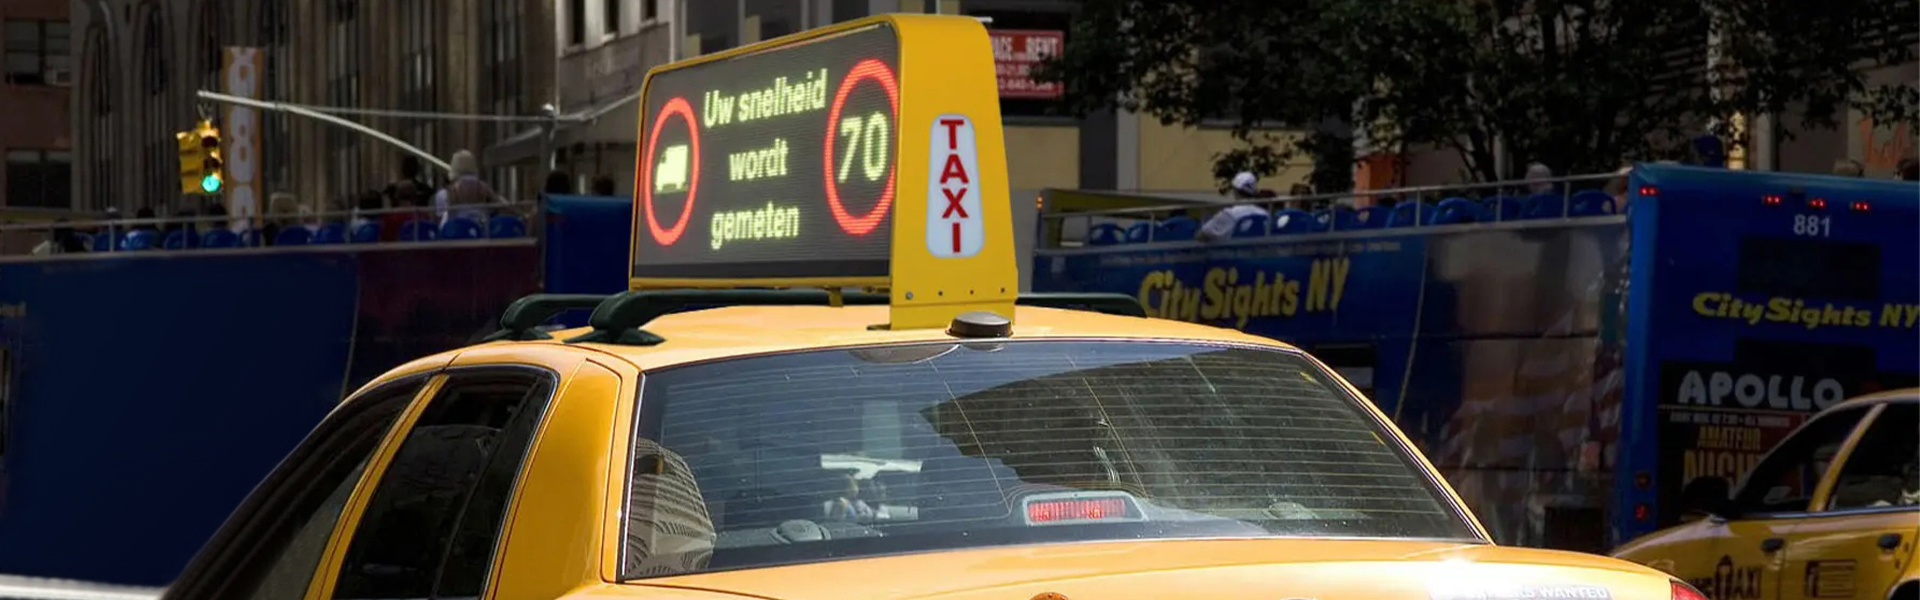 такси жогорку LED экран колдонмо